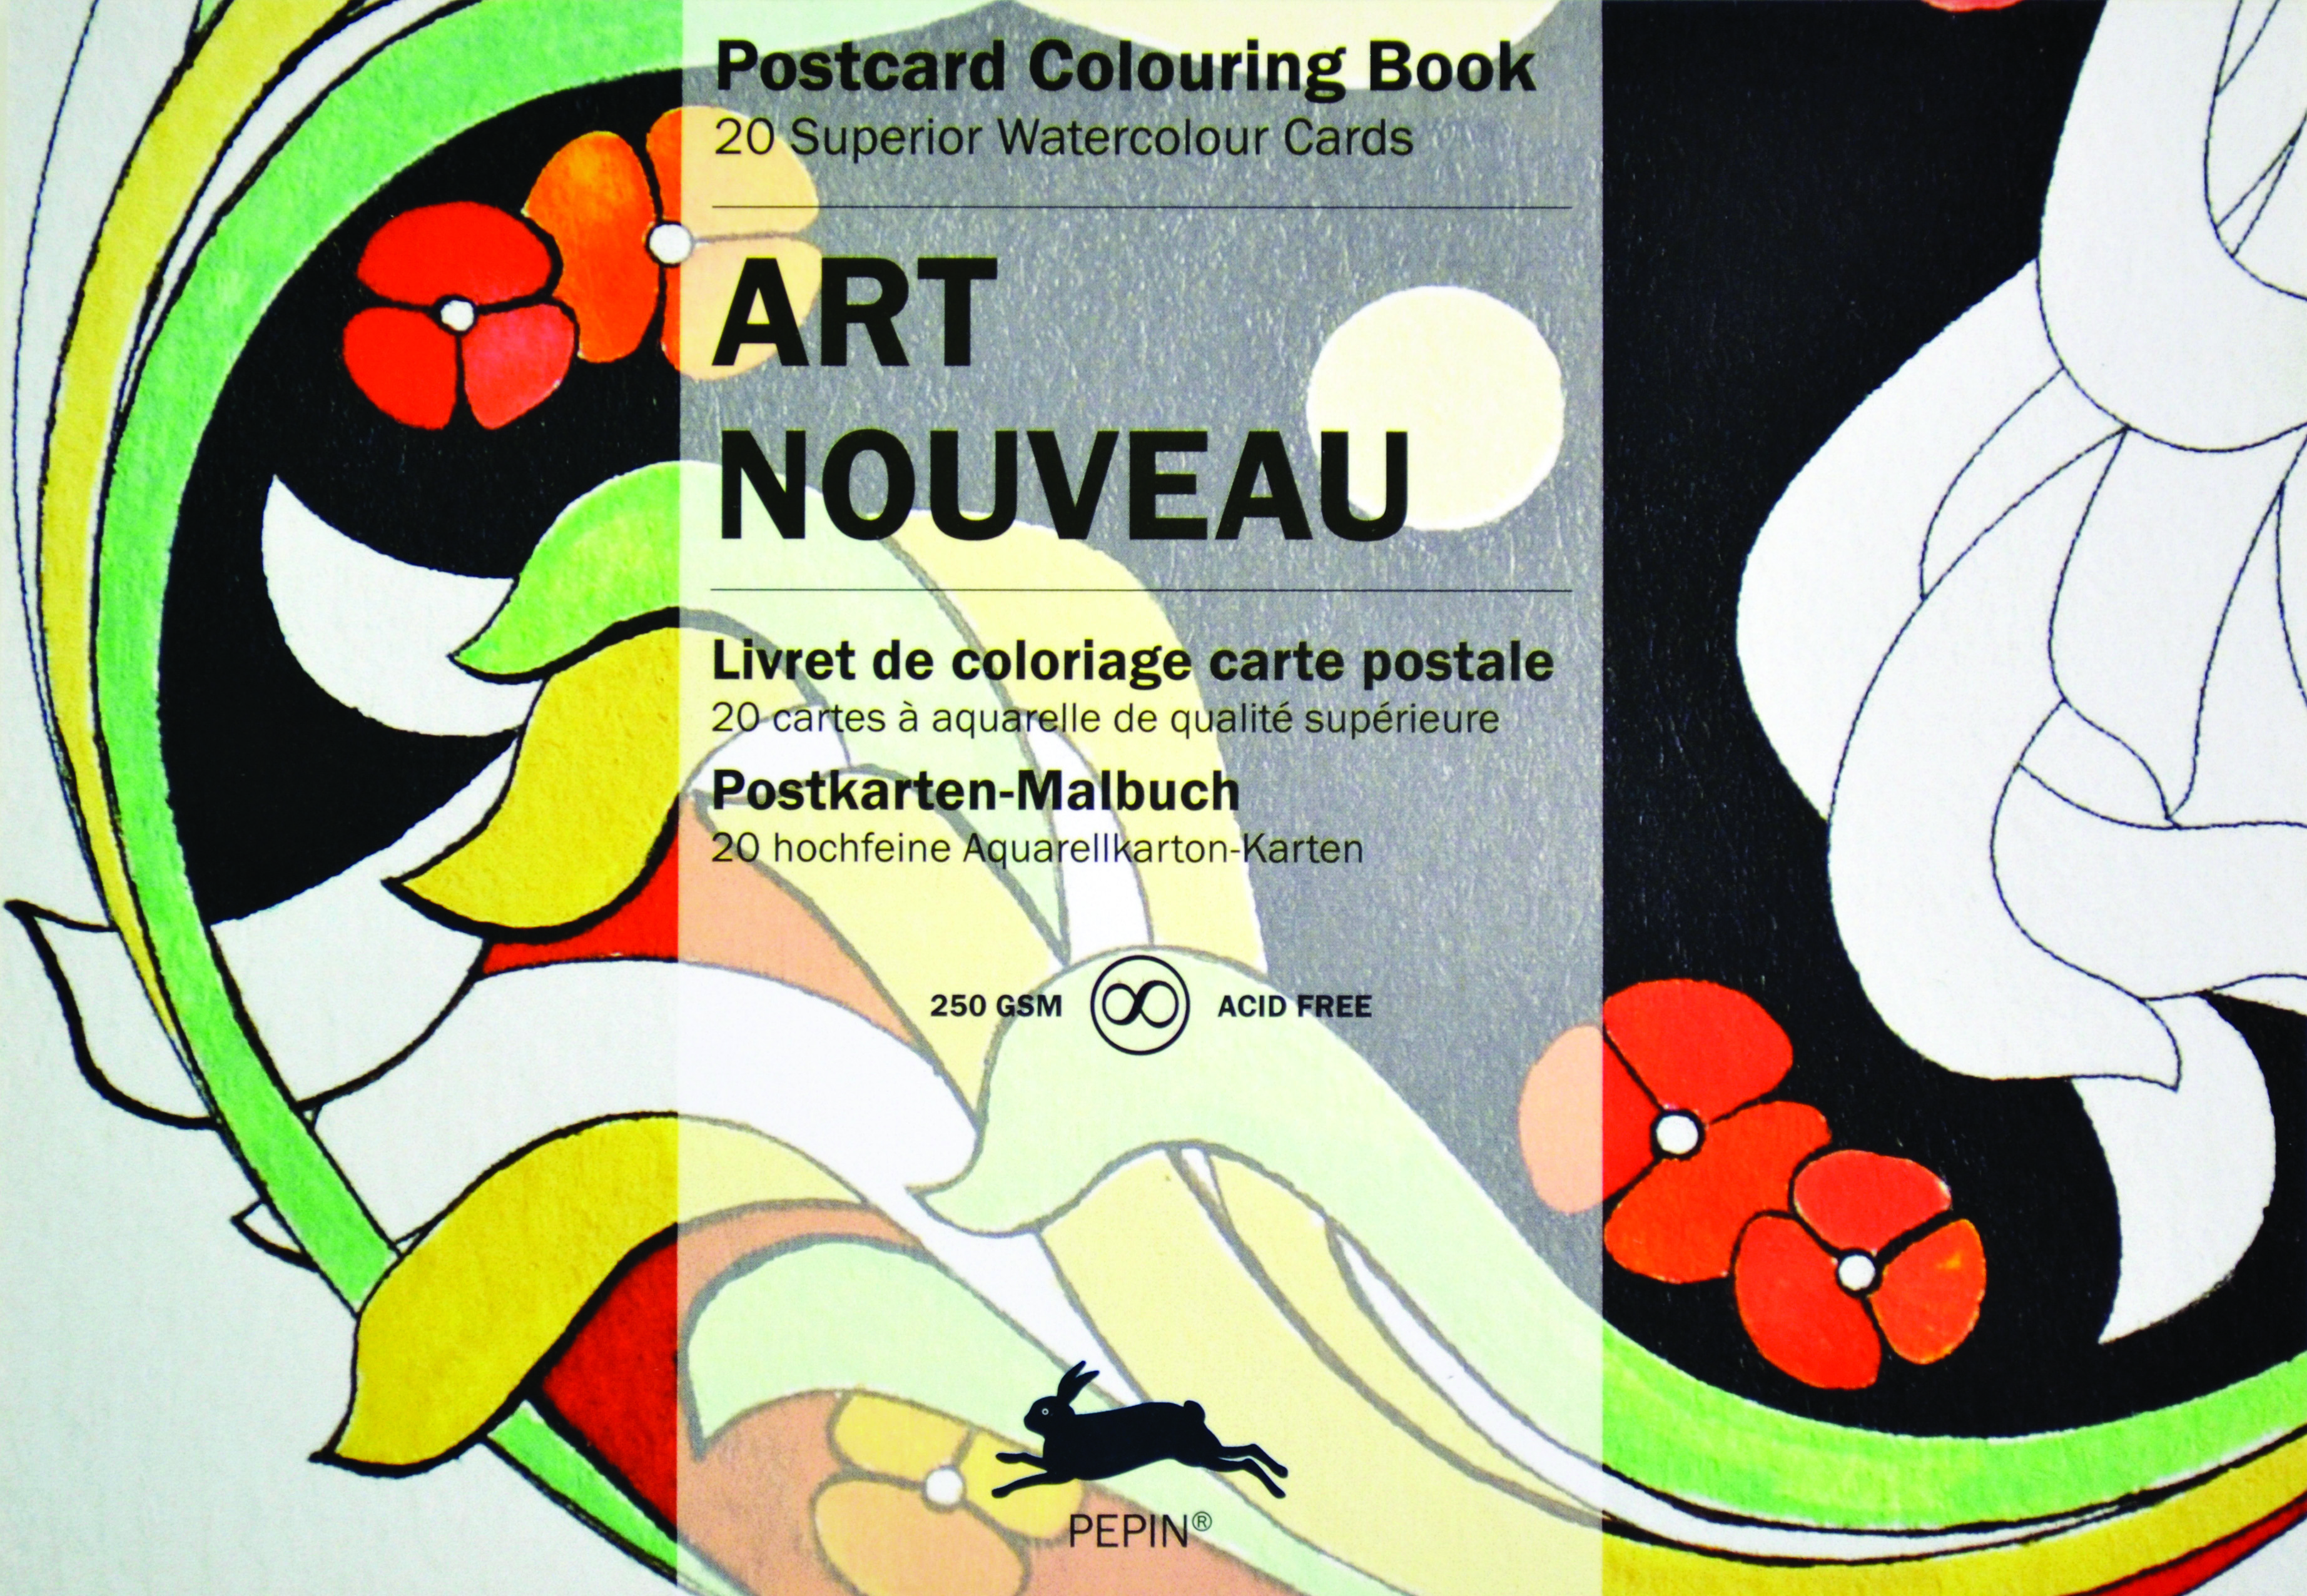 ART NOUVEAU: PEPIN POSTCARD COLOURING BOOK